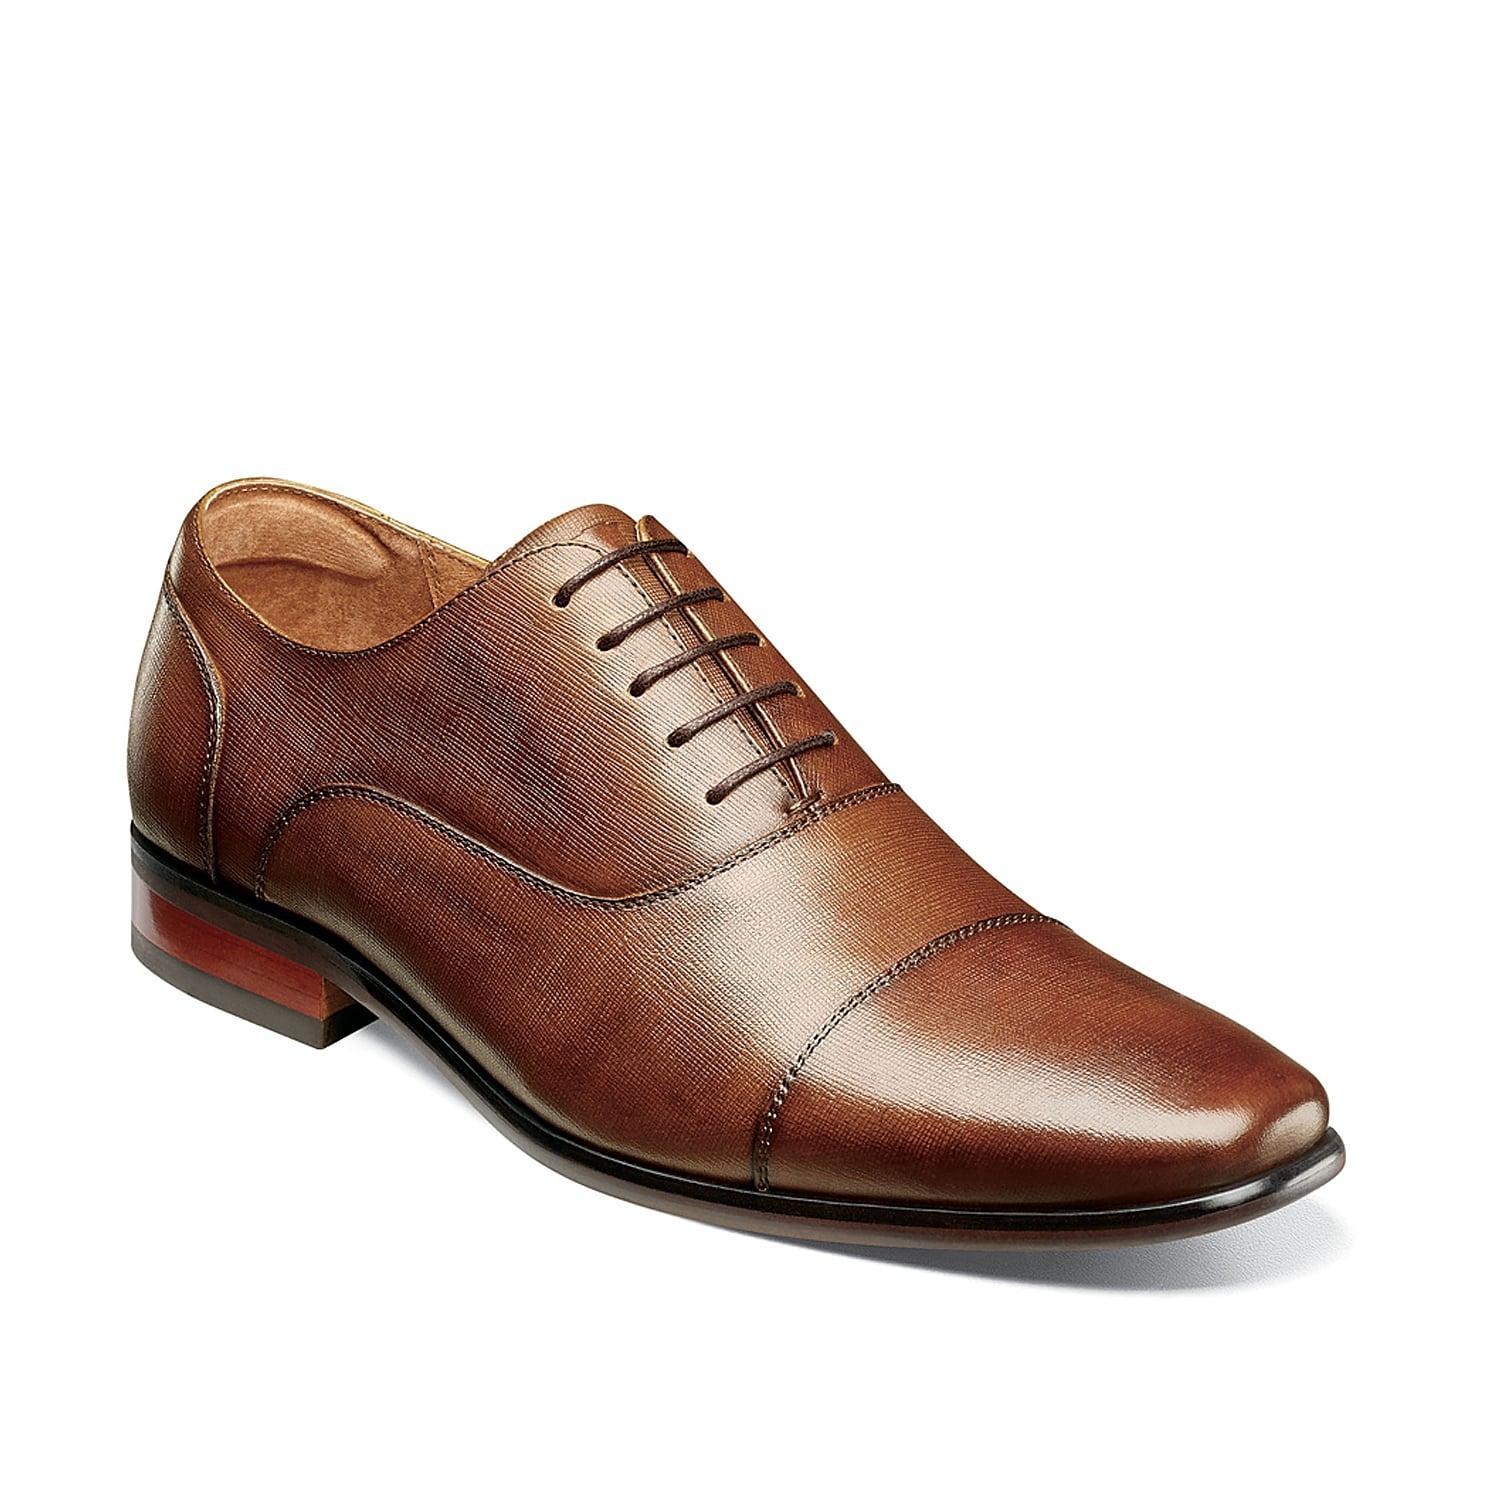 Florsheim Postino Cap Toe (Cognac Scratch Print) Men's Shoes Product Image